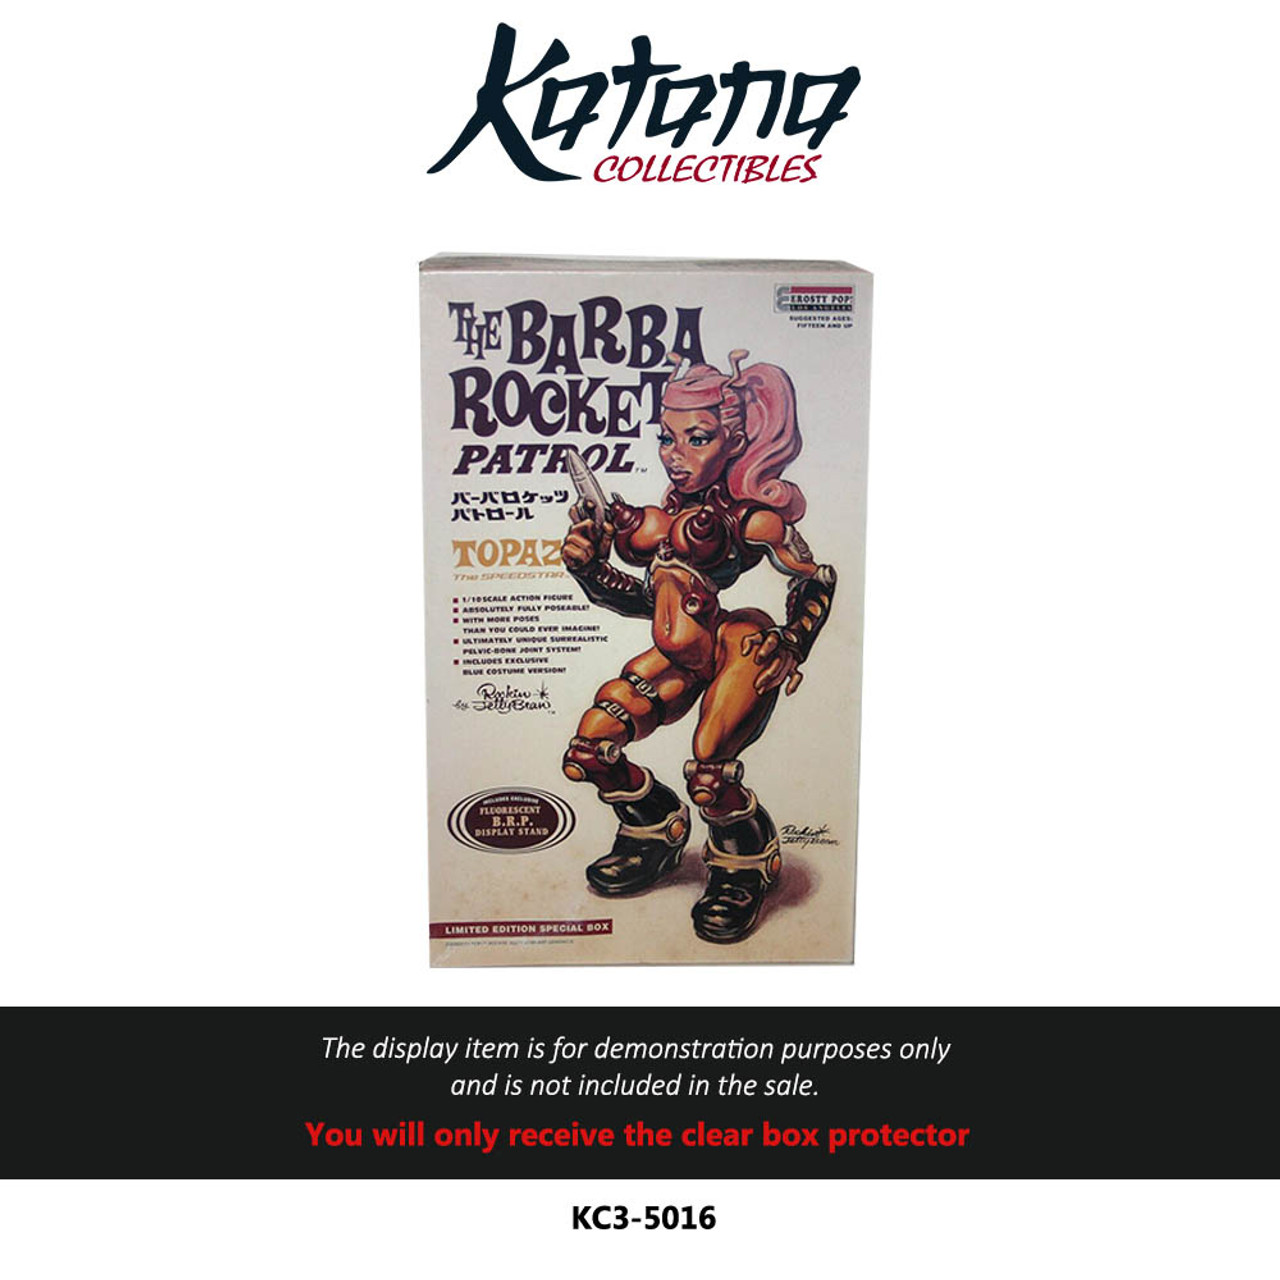 Katana Collectibles Protector For Barba Rocket Patrol Topaz (Box) by Rockin' Jelly Bean